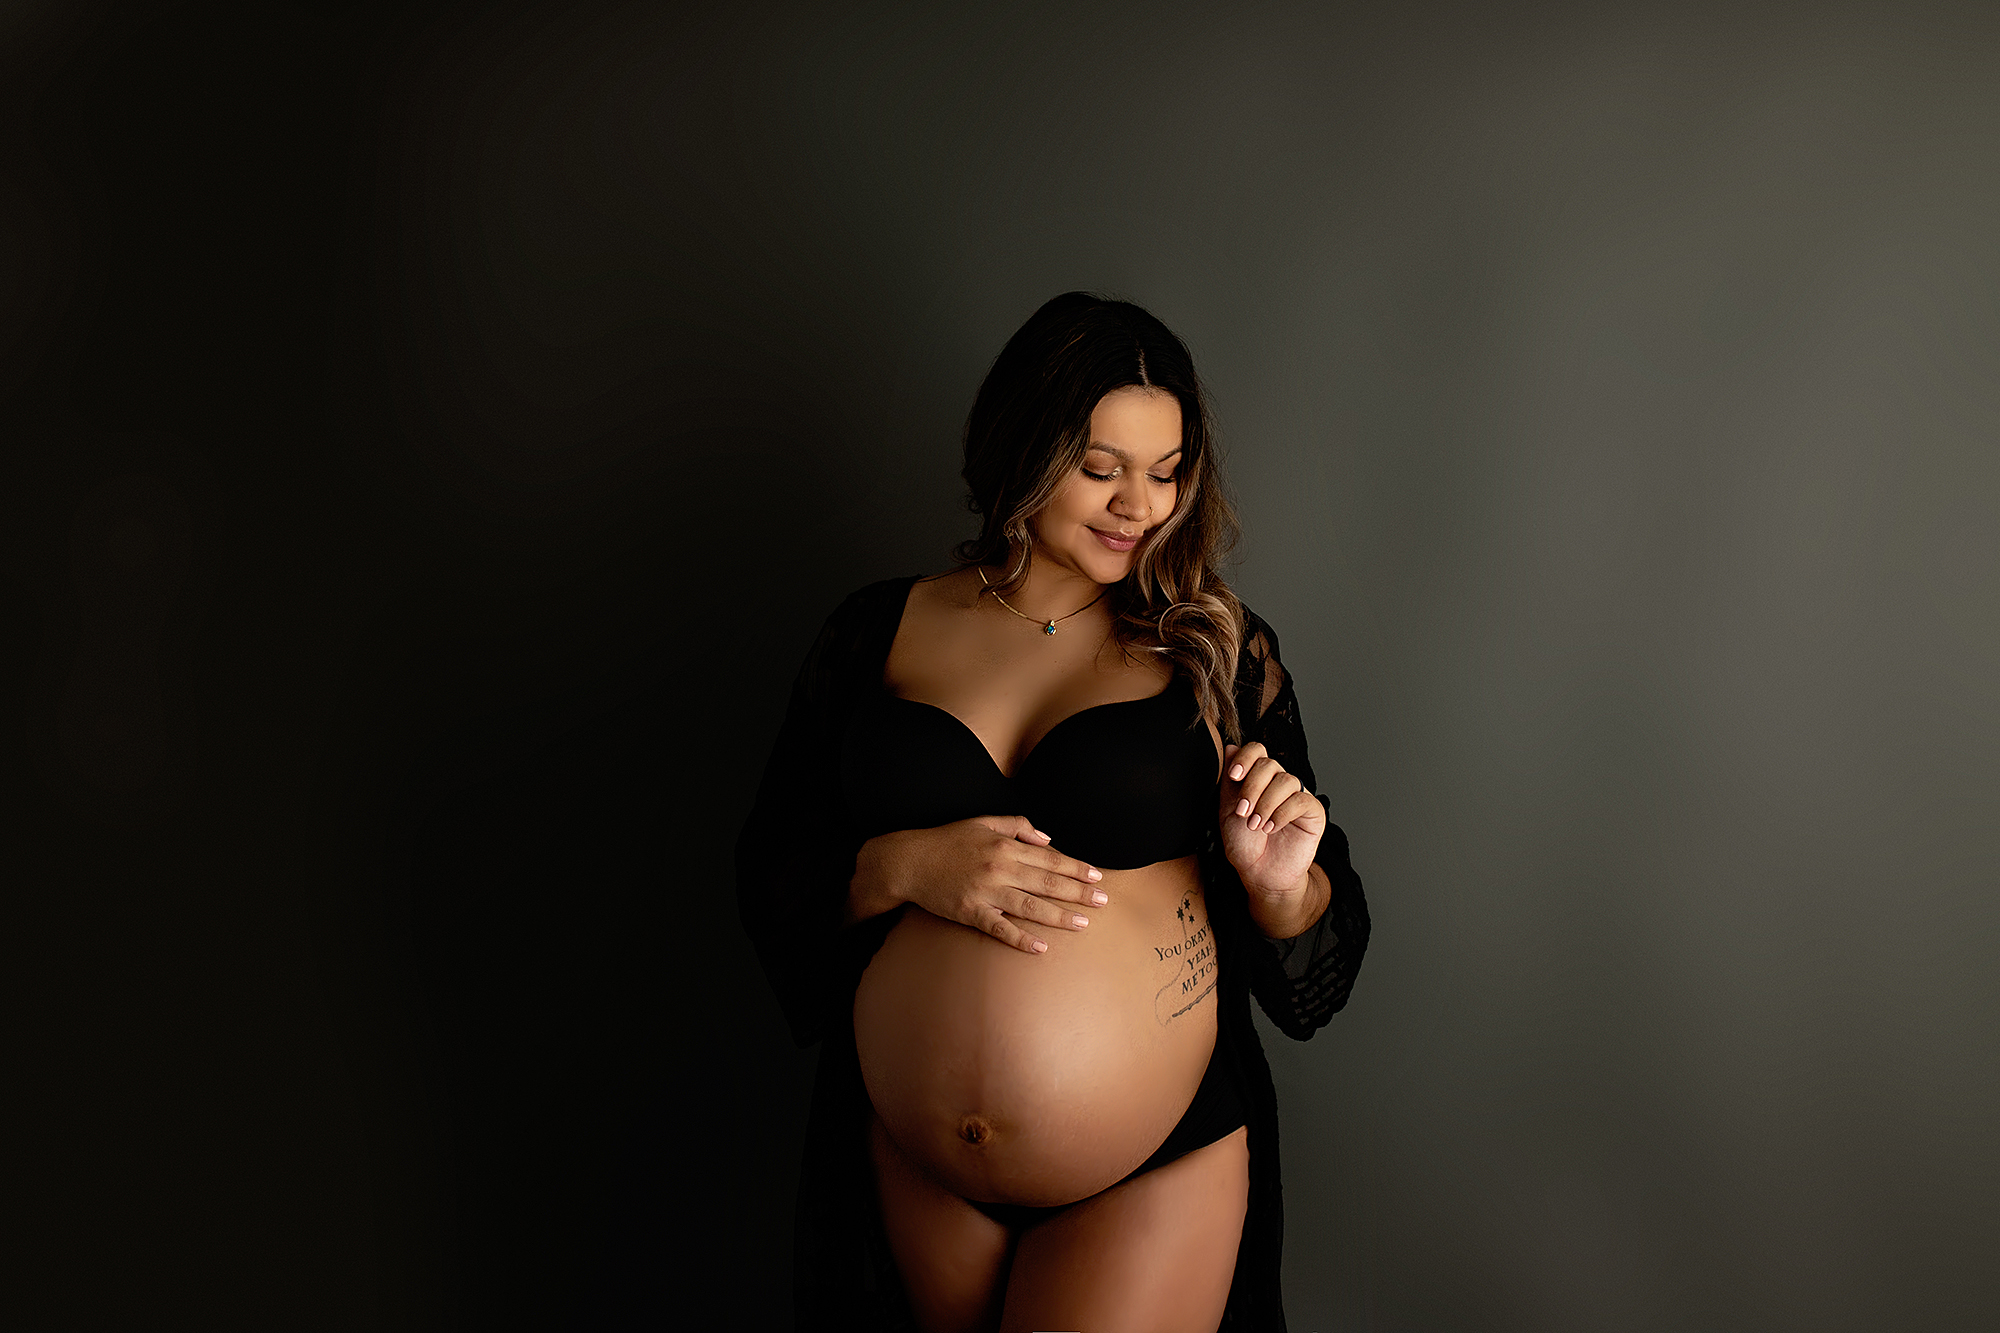 Milwaukee maternity photographer, maternity photography in Milwaukee